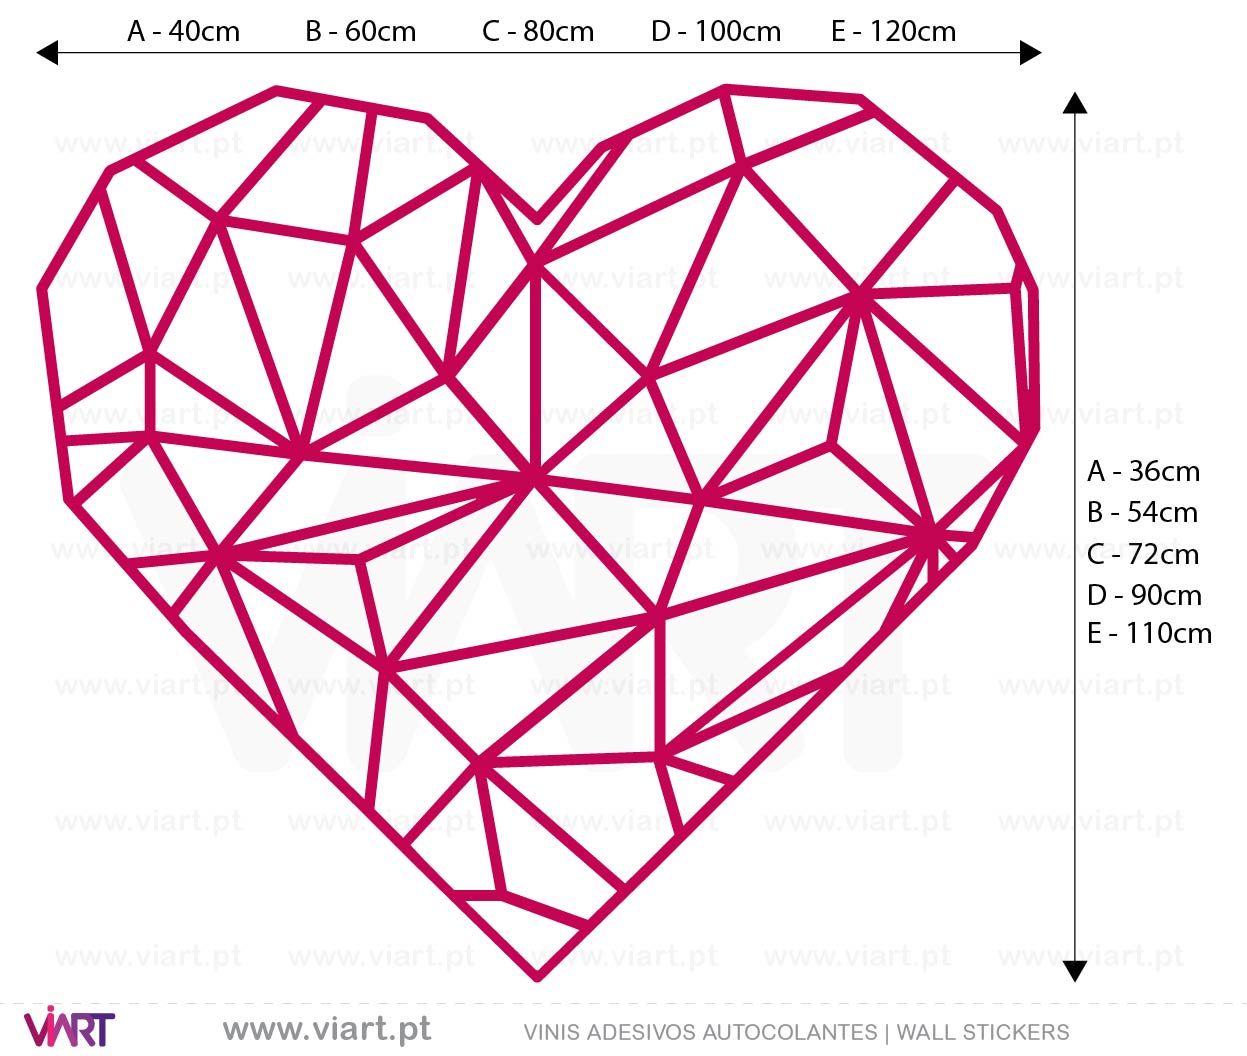 Viart - WALL STICKERS - Geometric Heart Decal! Origami! Medidas